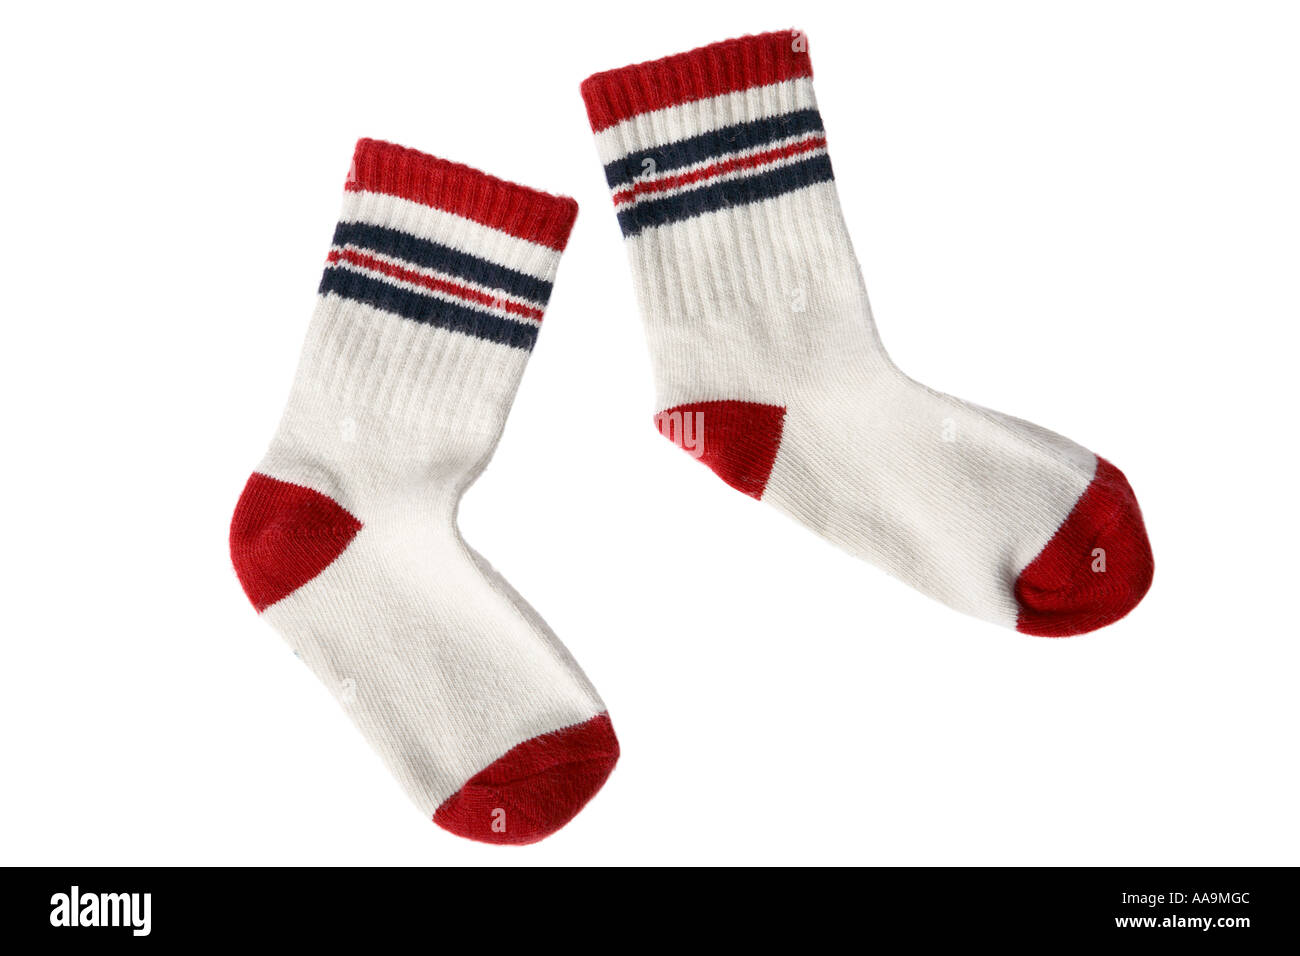 Pair of striped socks Stock Photo